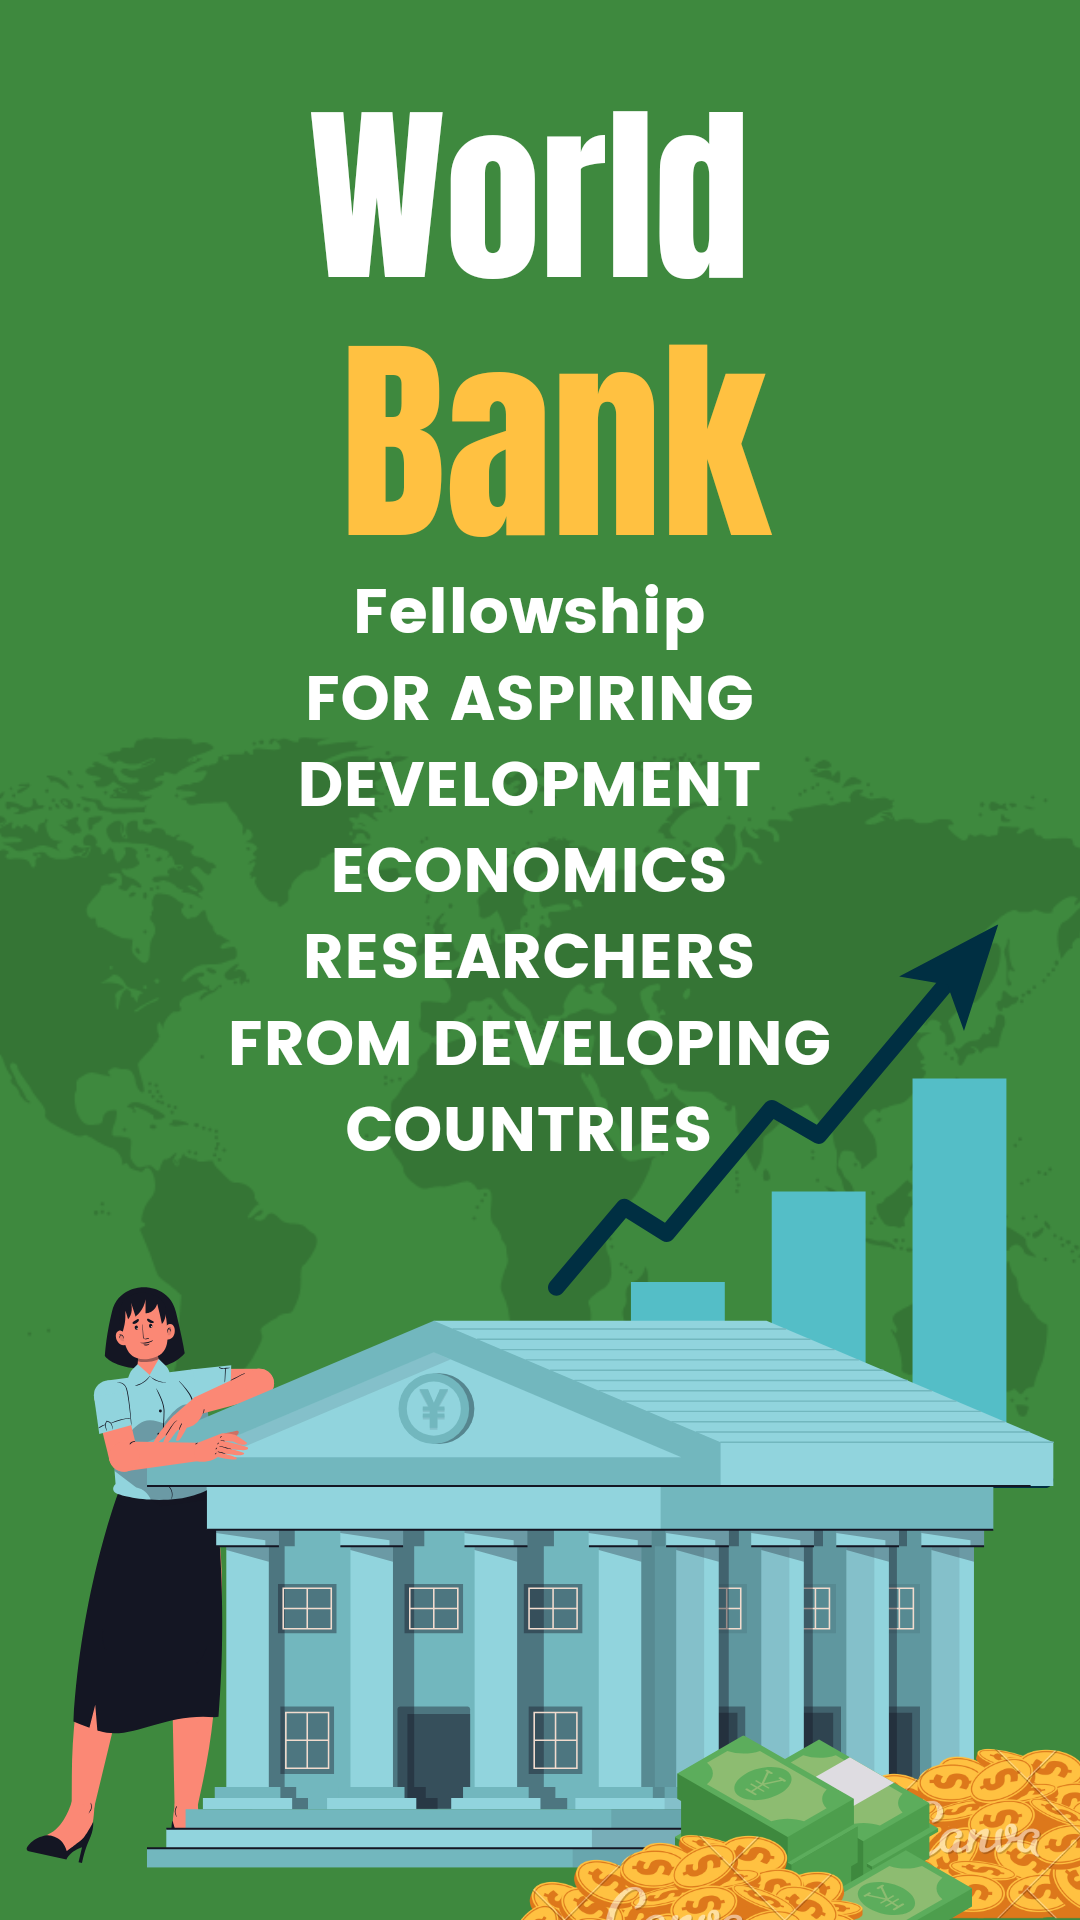 WORLD BANK FELLOWSHIPS PROGRAM